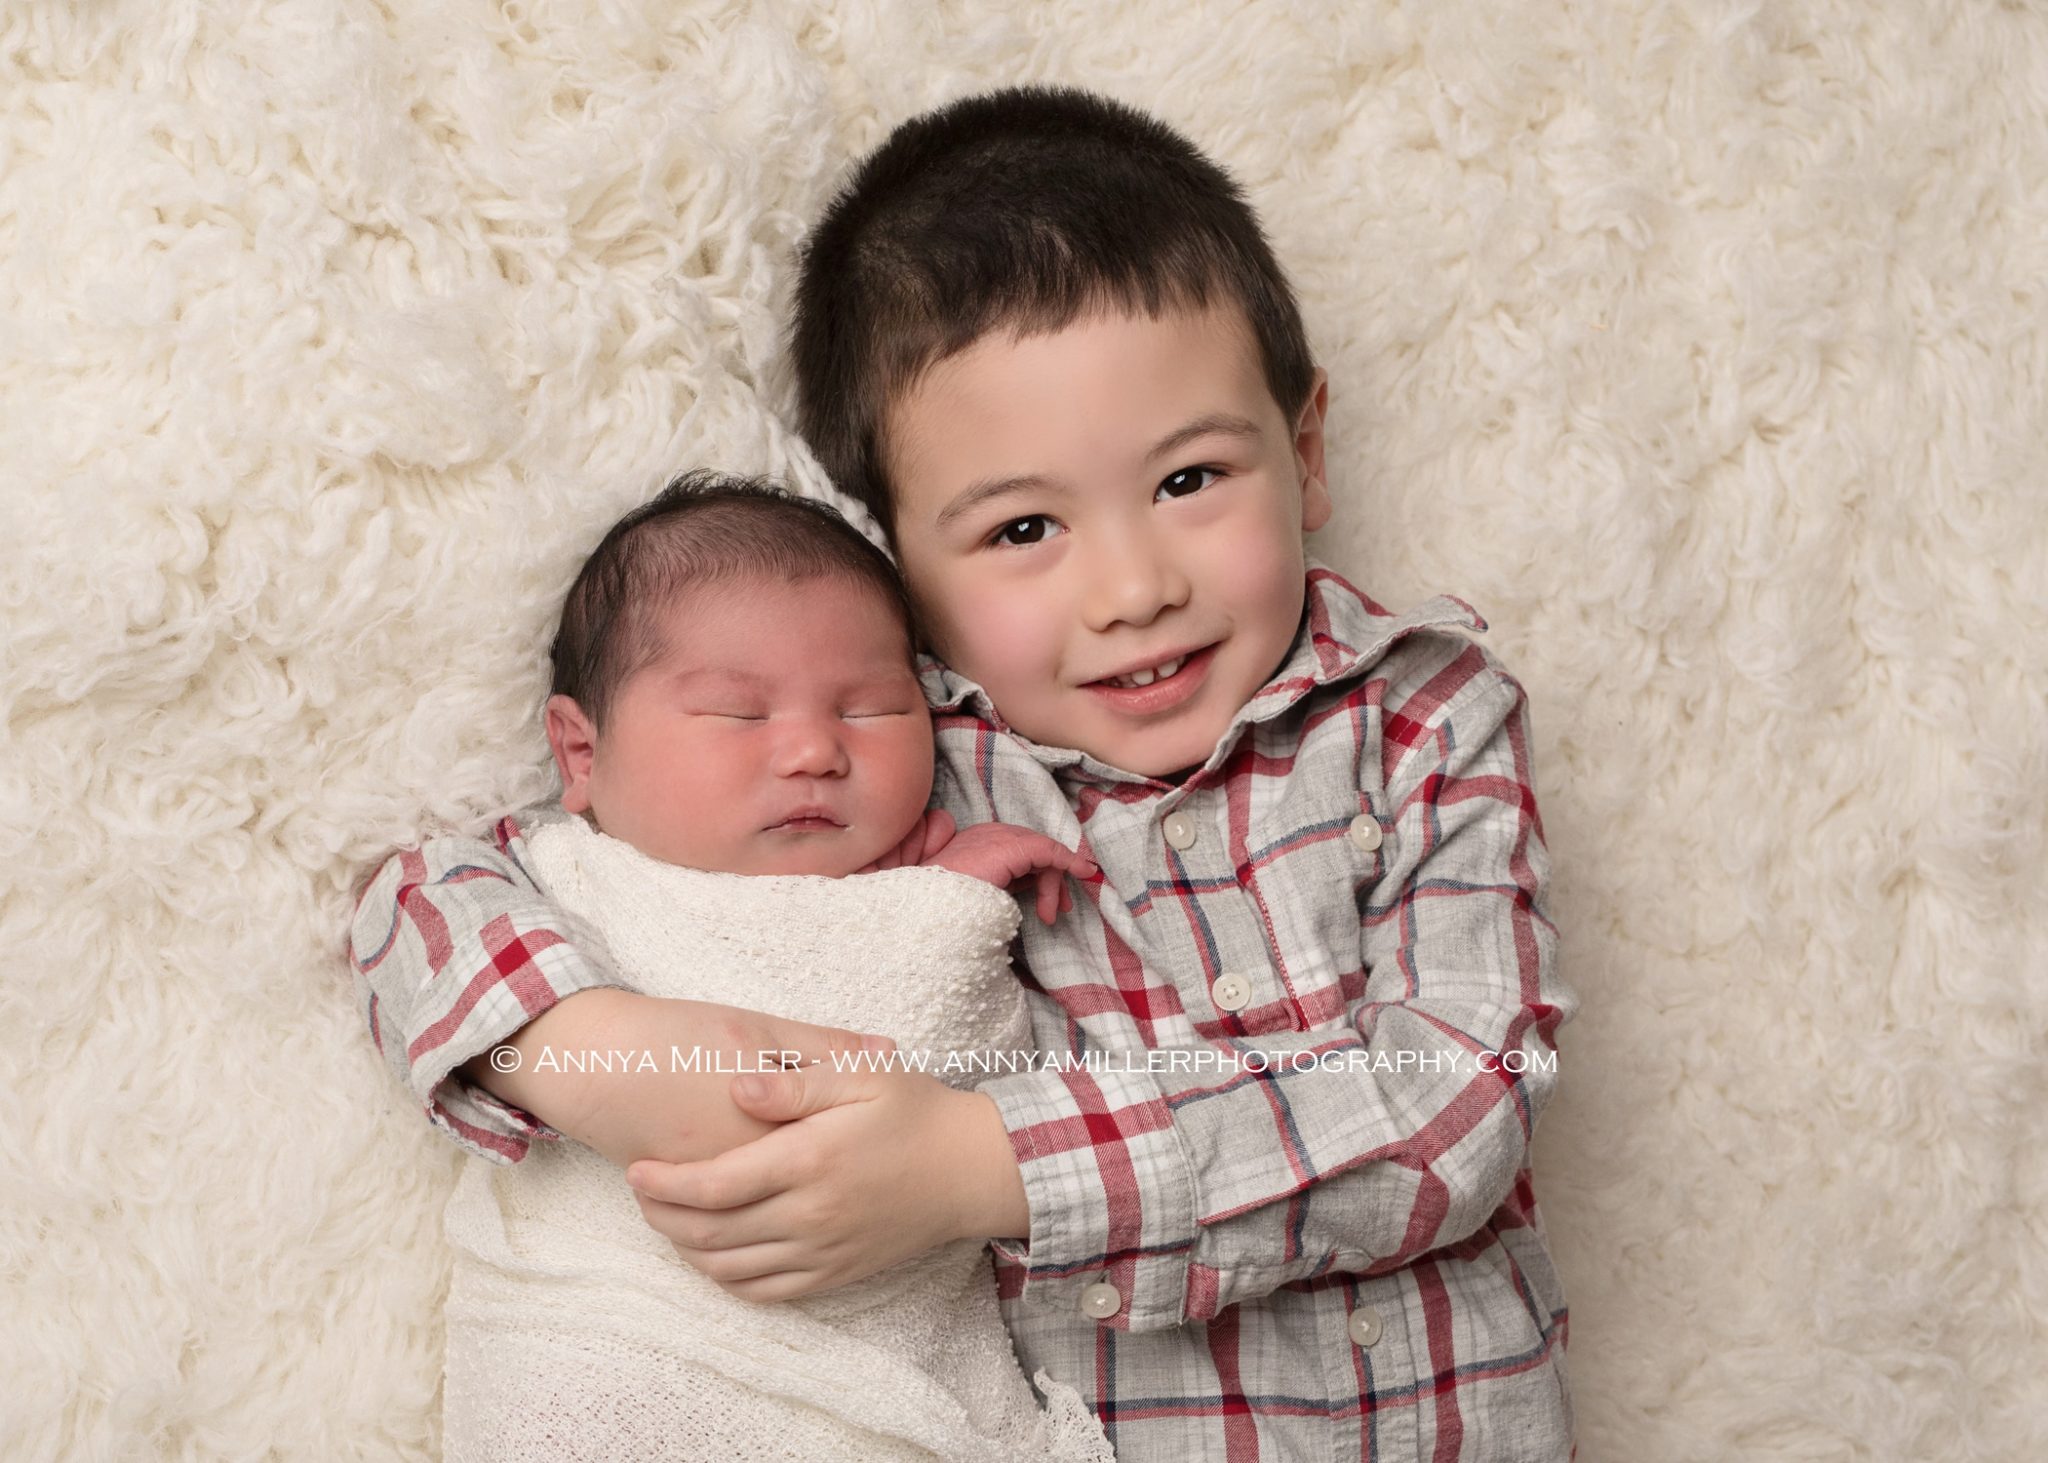 Newborn portraits of baby girl by Toronto area newborn photographer Annya Miller